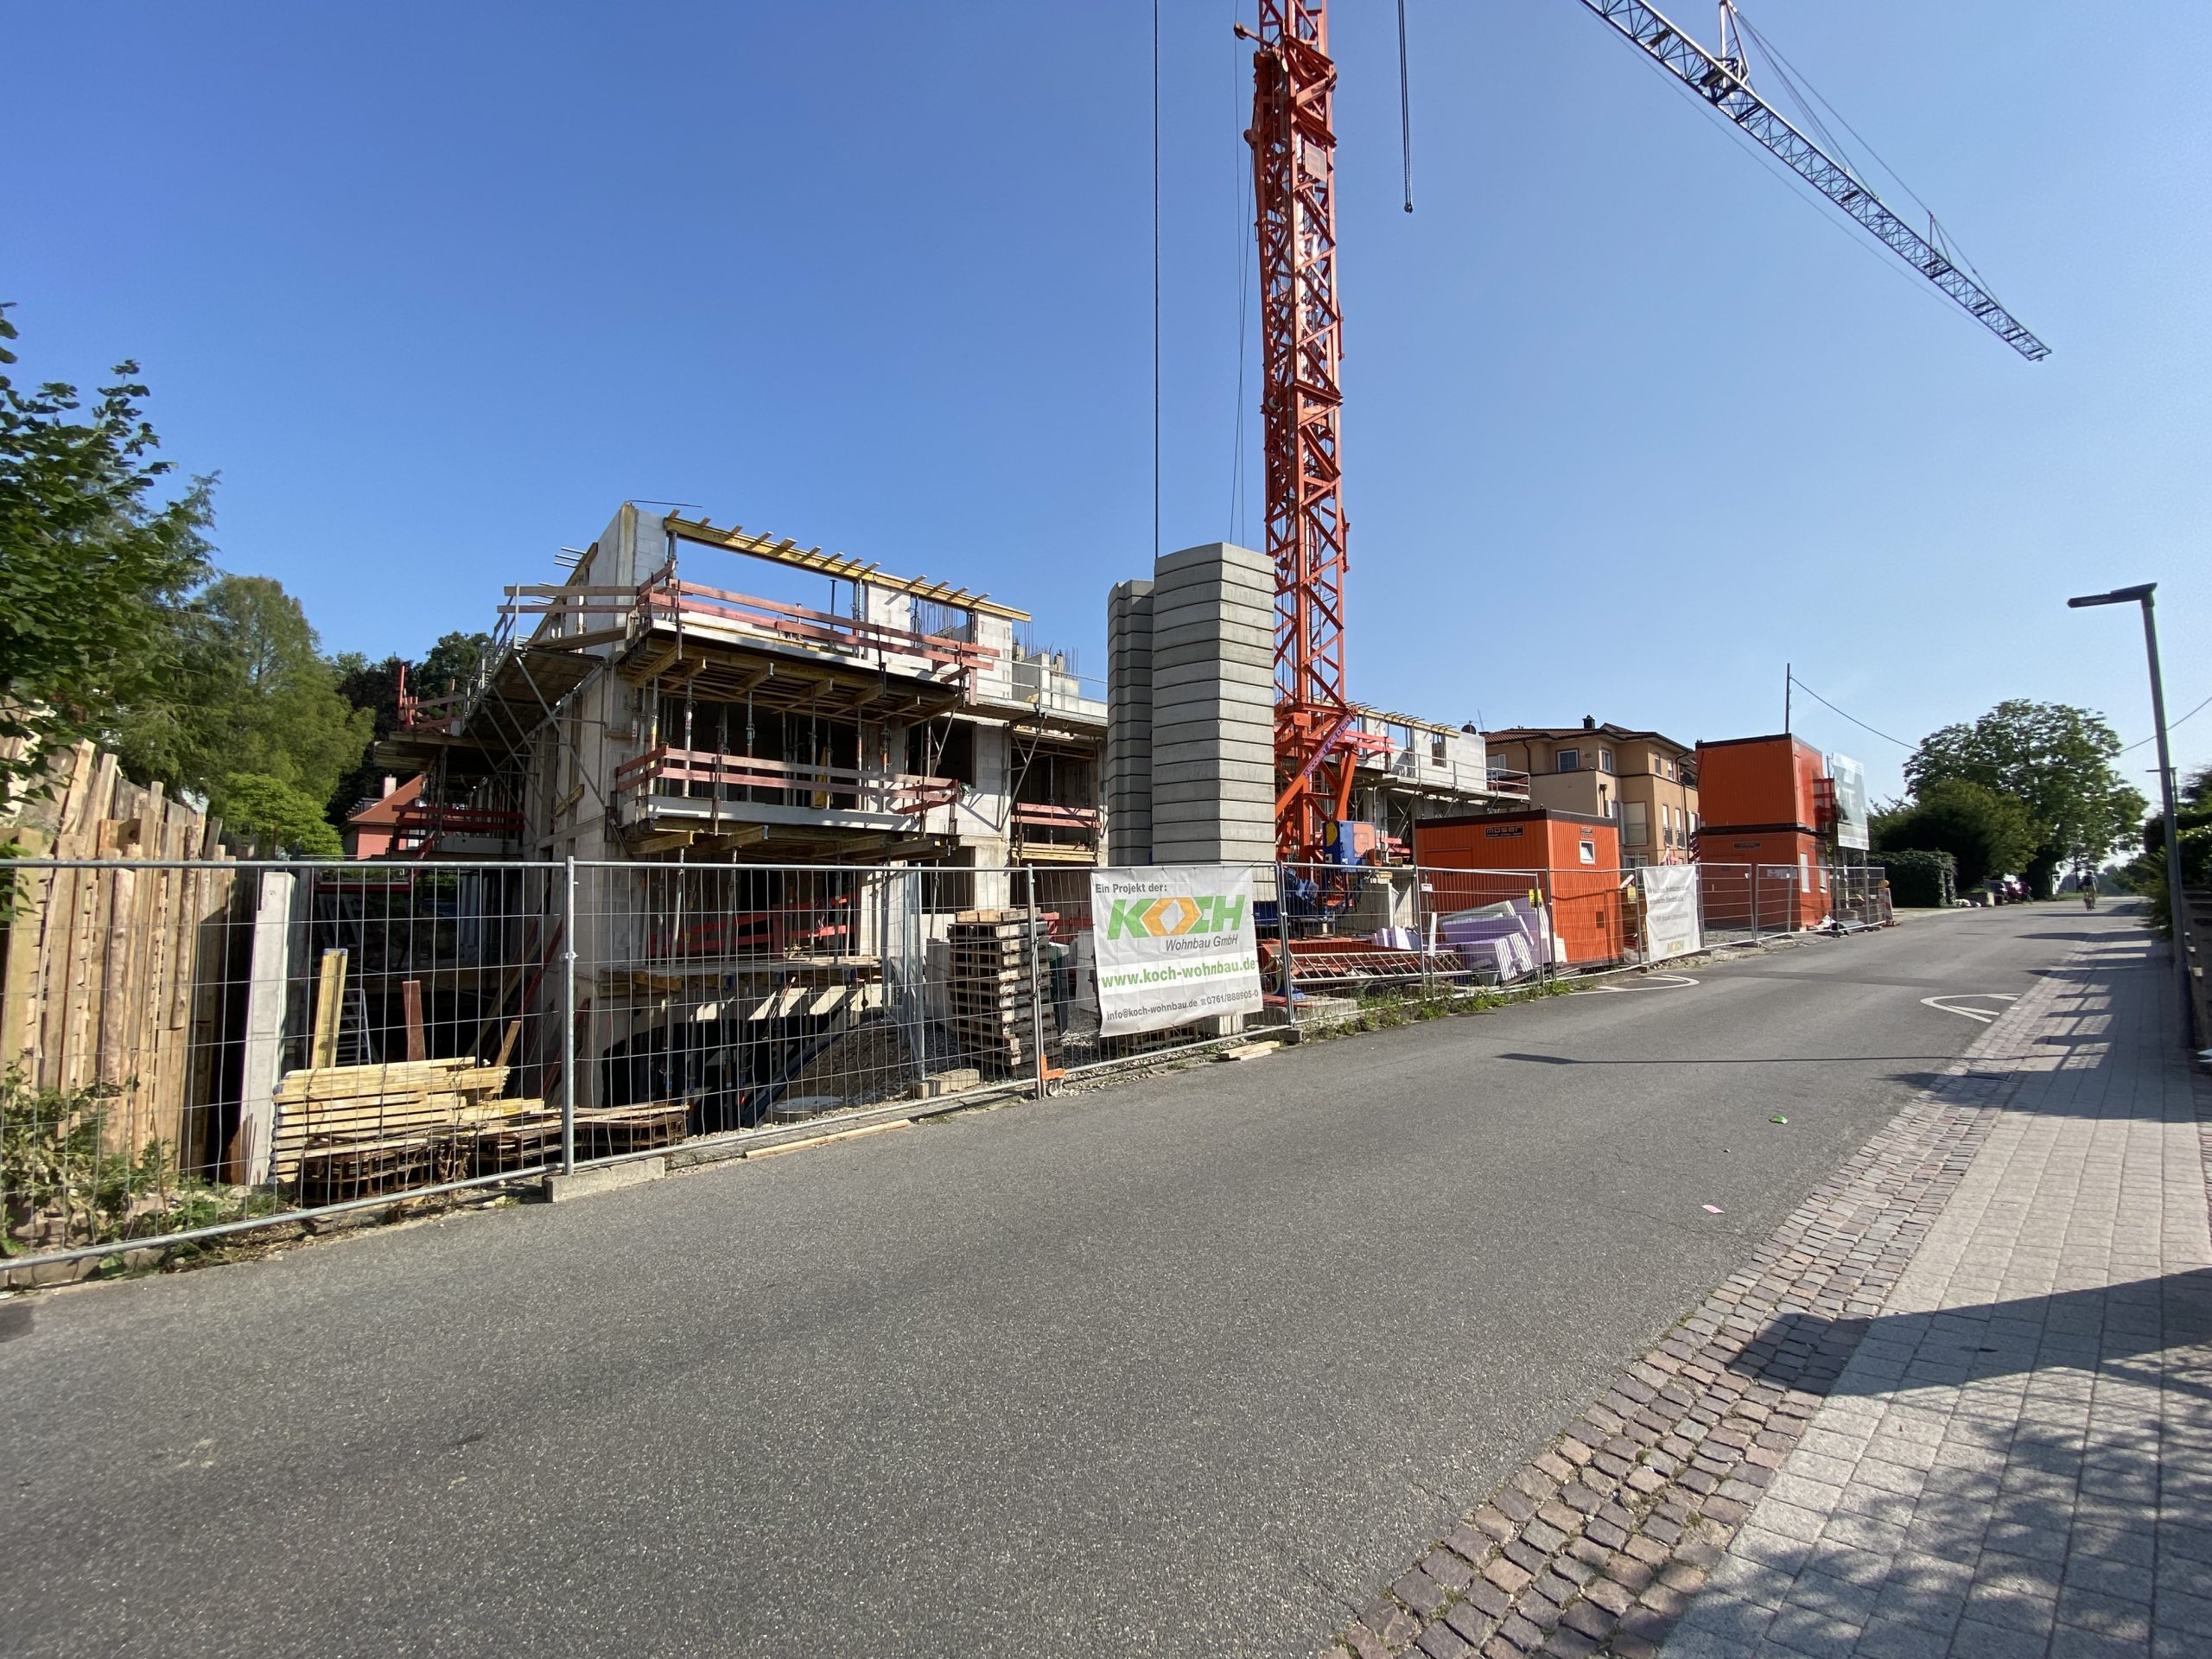 Baustelle Bad Krozingen 21.07.2021